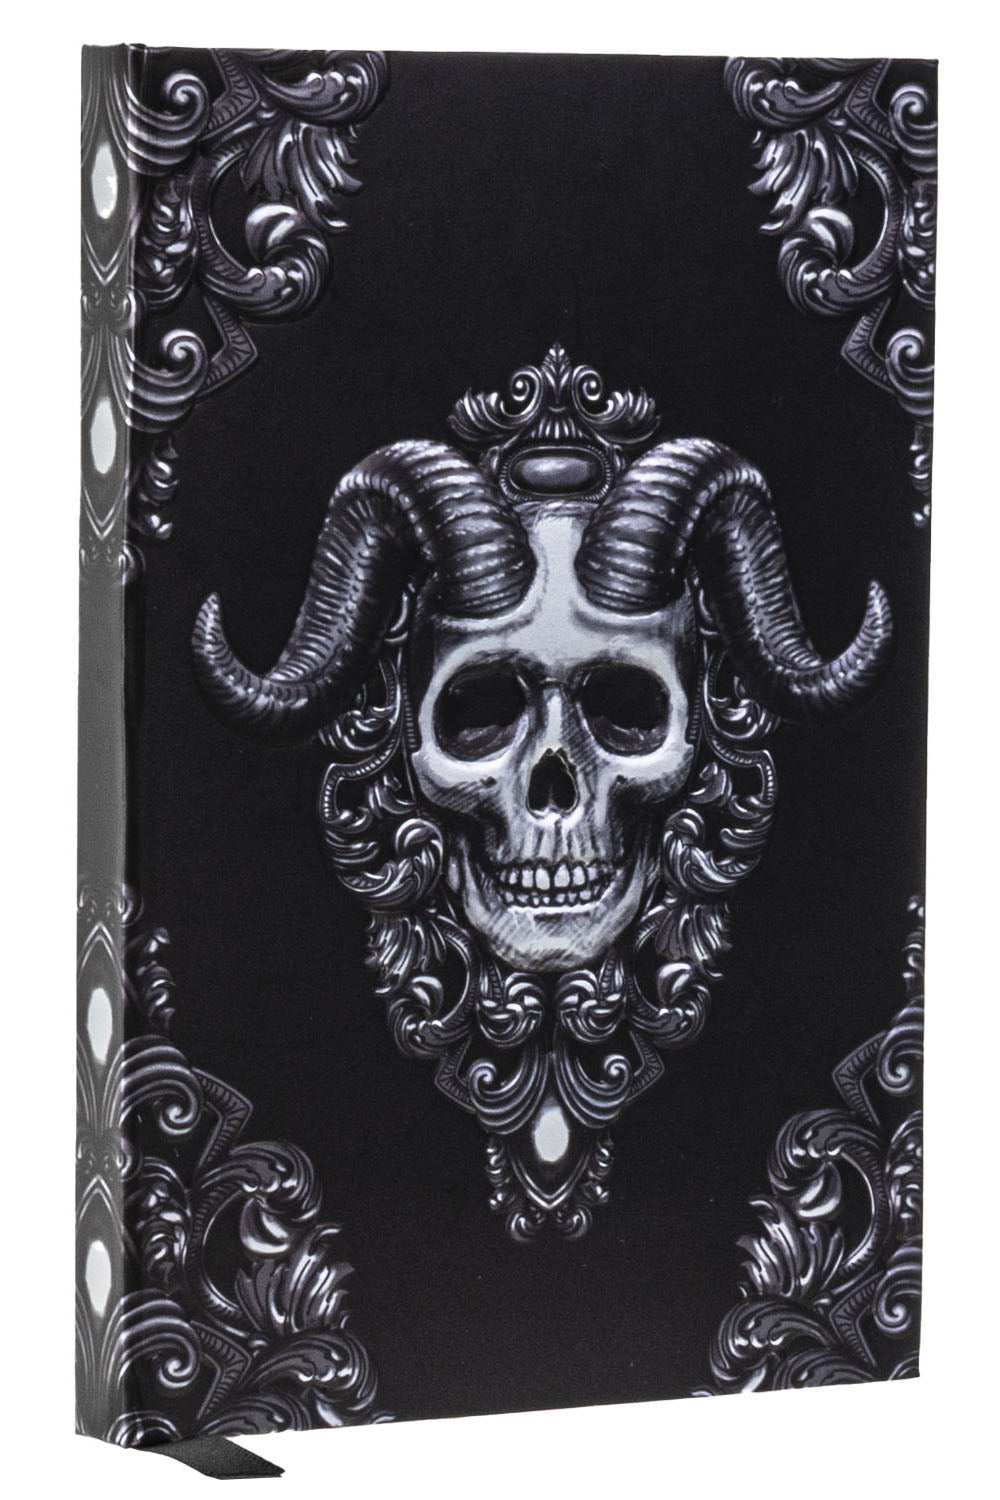 Victorian skull heavy metal journal